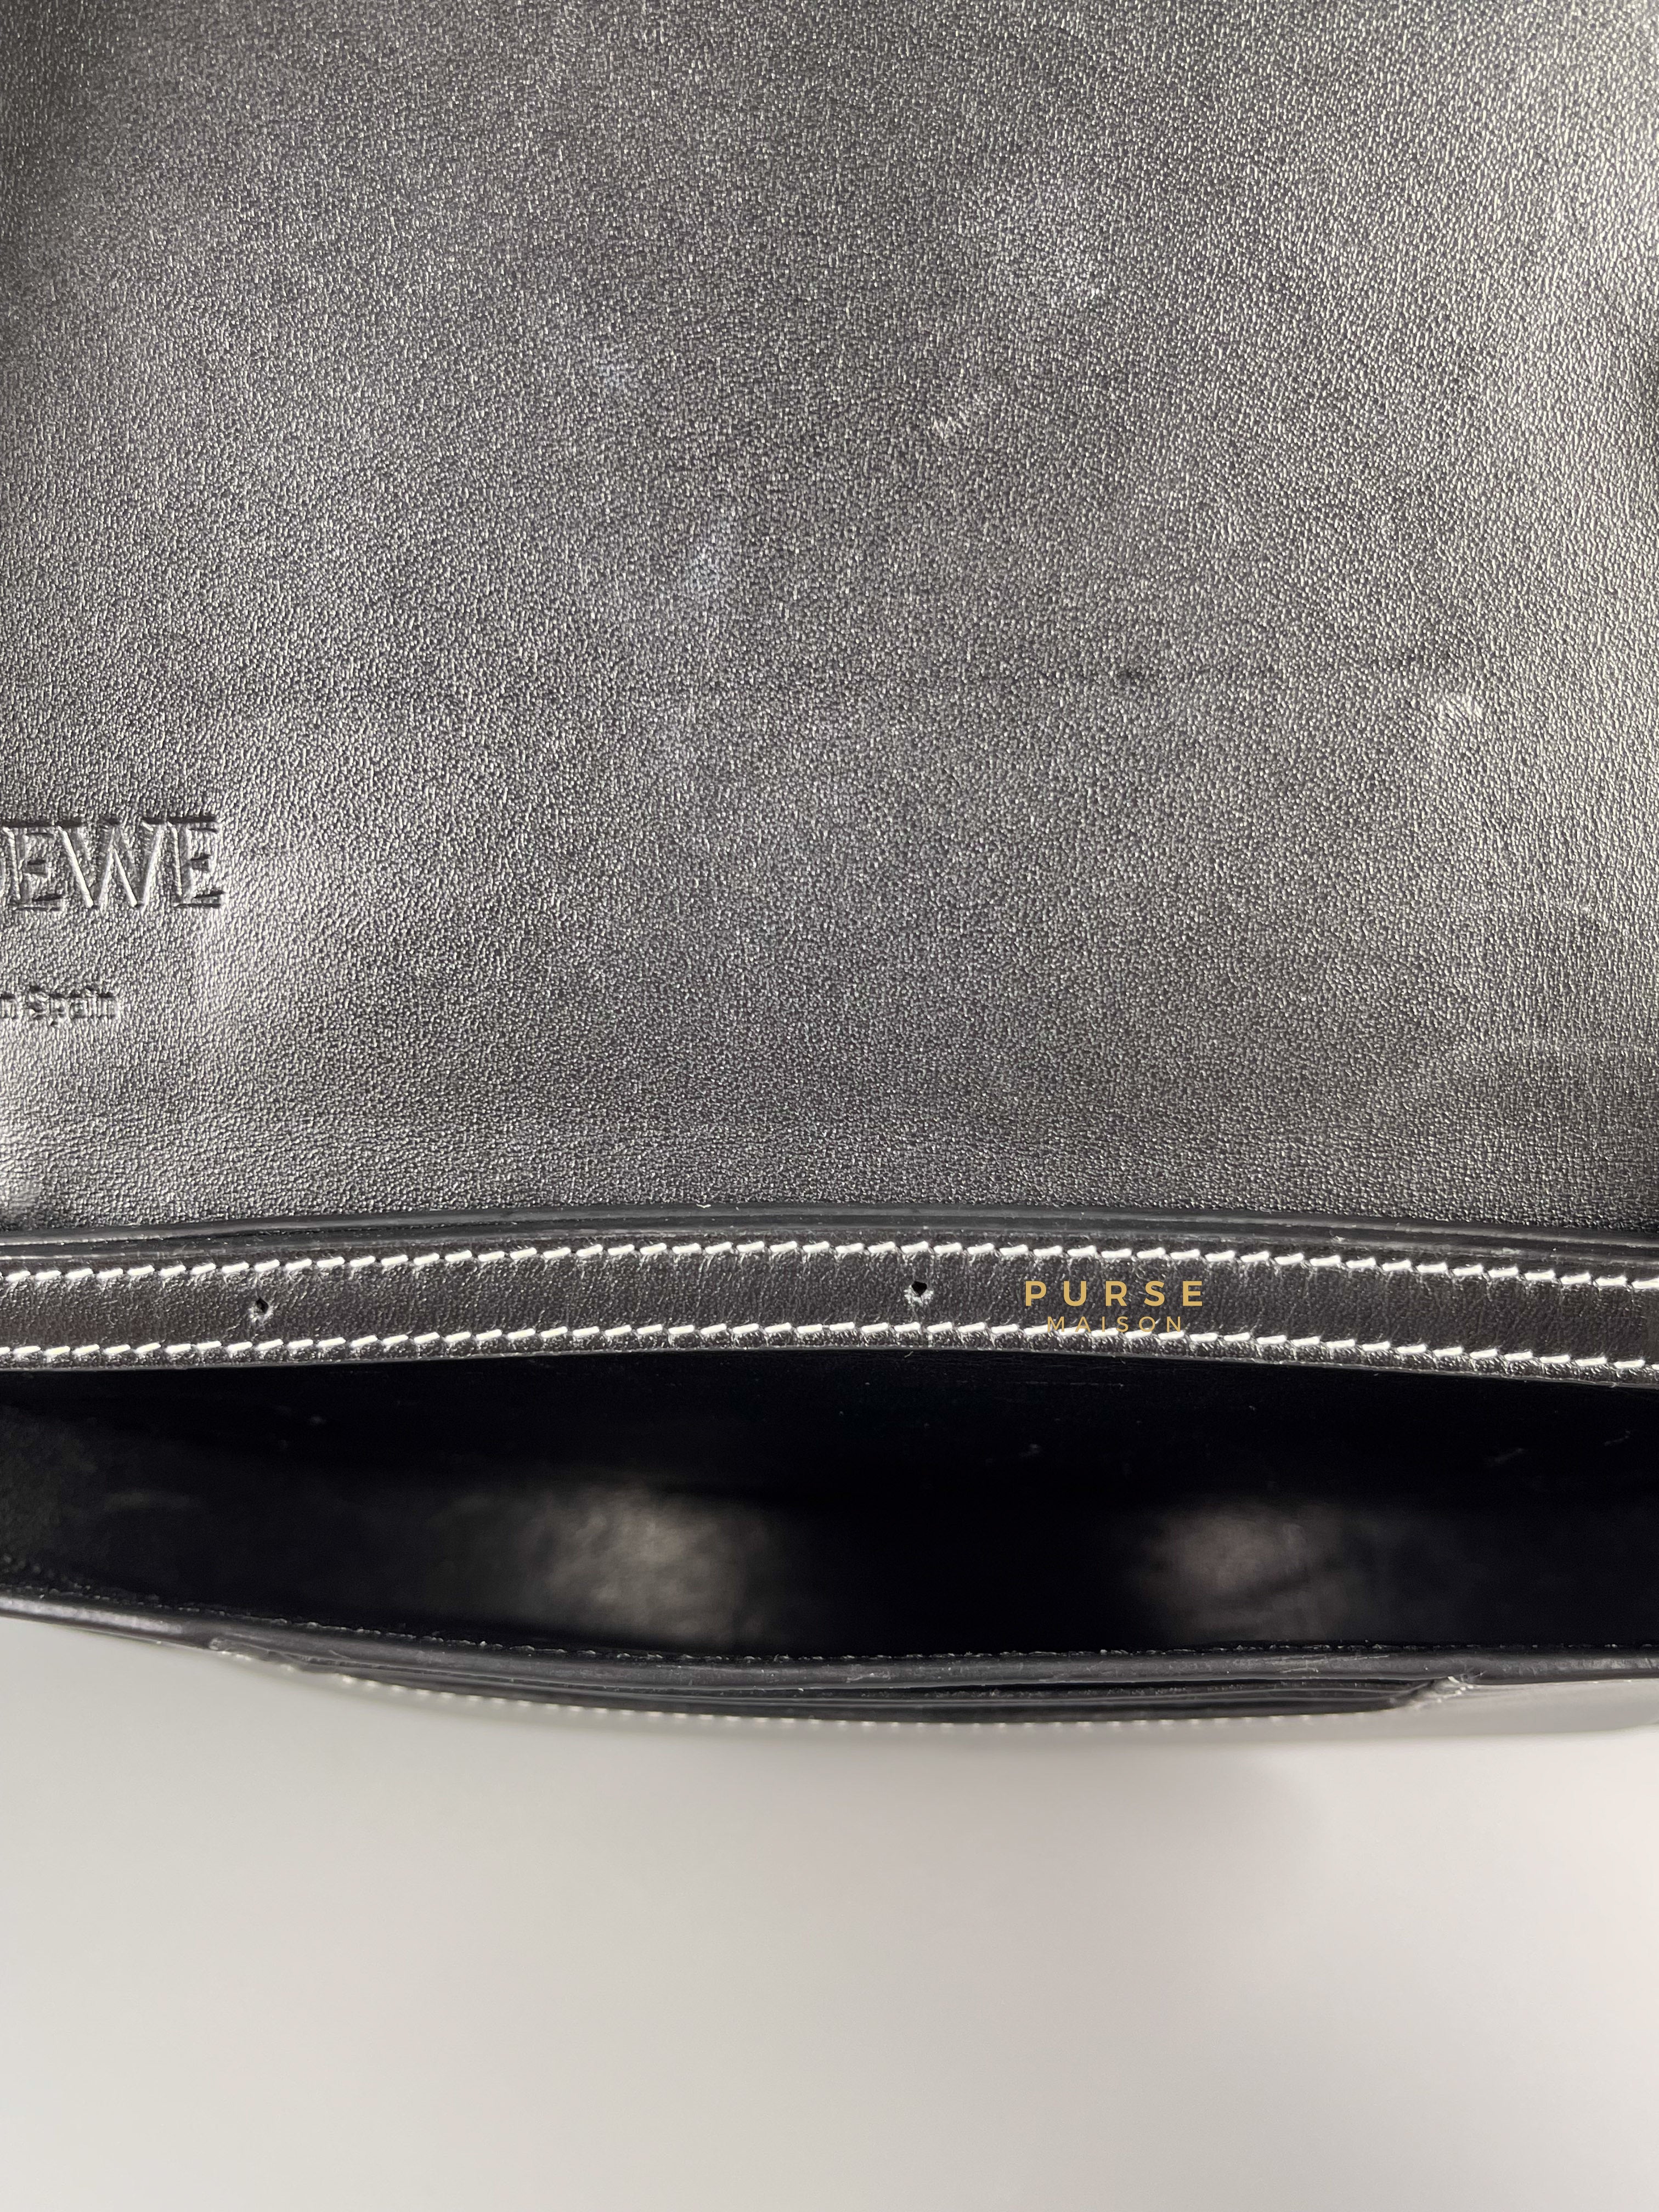 Loewe Mini Bolso Heel Black Bag | Purse Maison Luxury Bags Shop